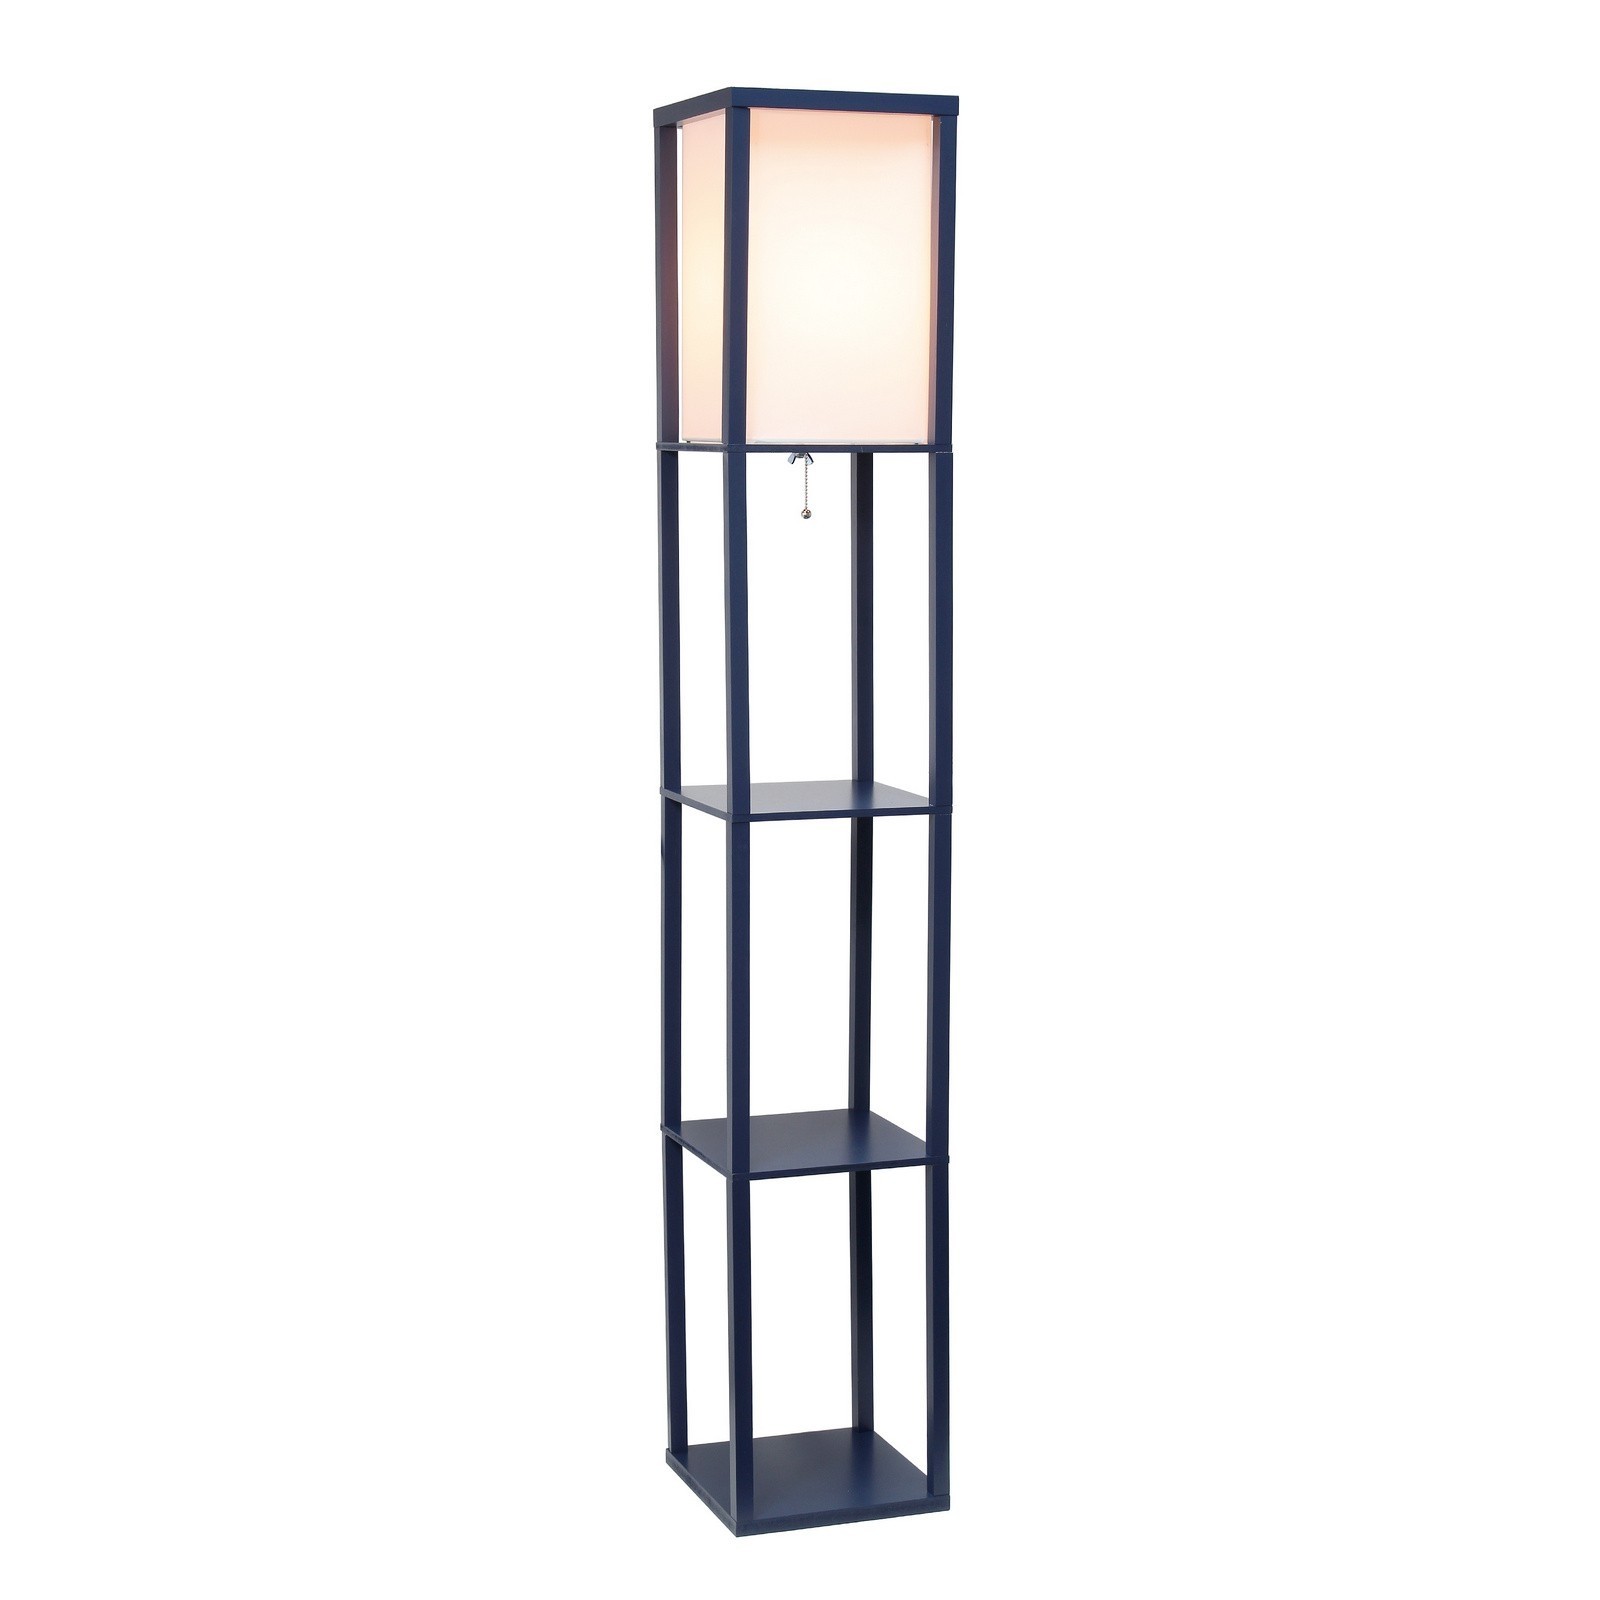 Floor lamp with shelves 2